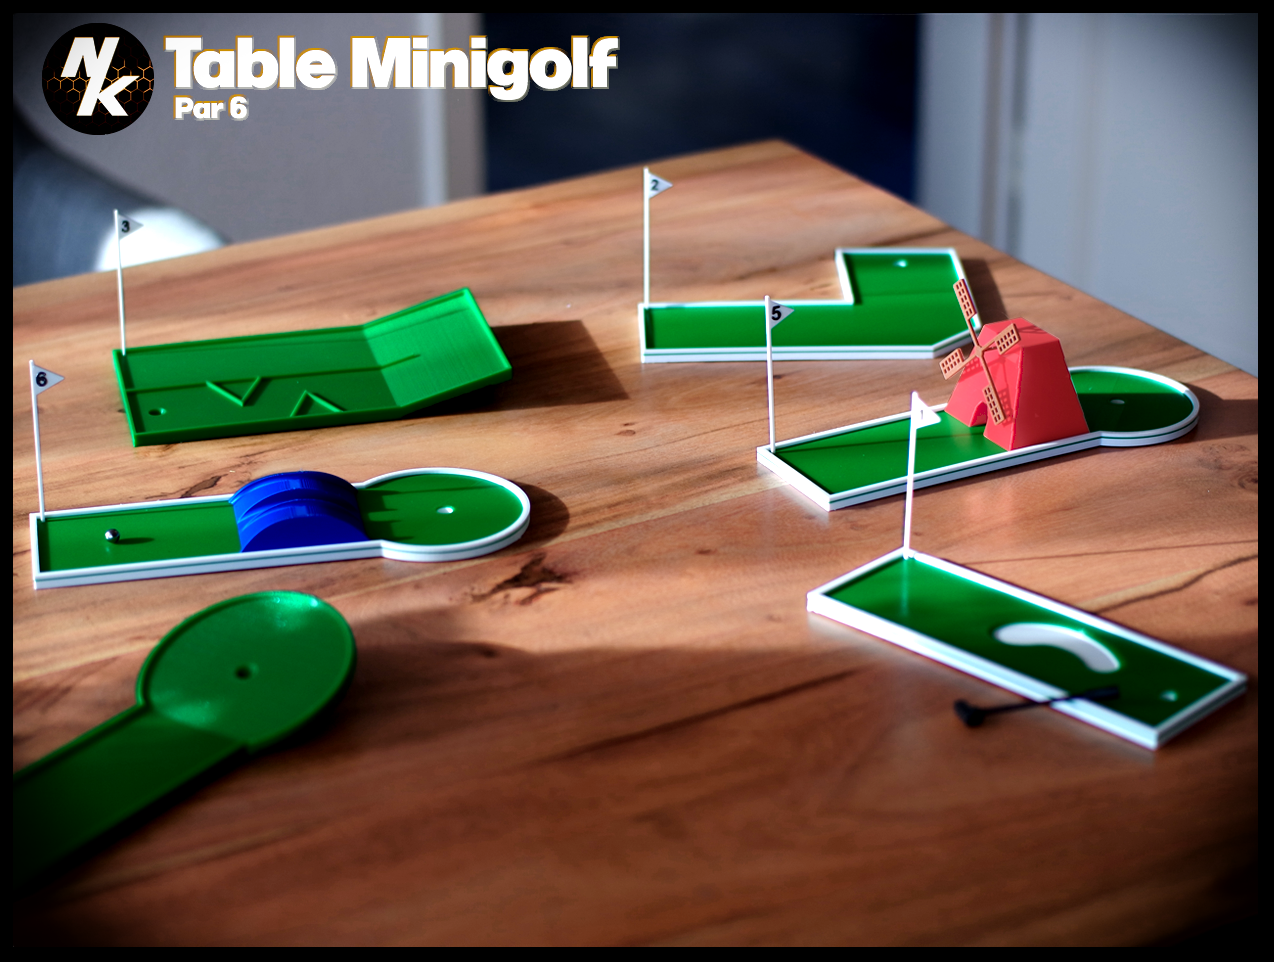 Table Minigolf (Par 6)